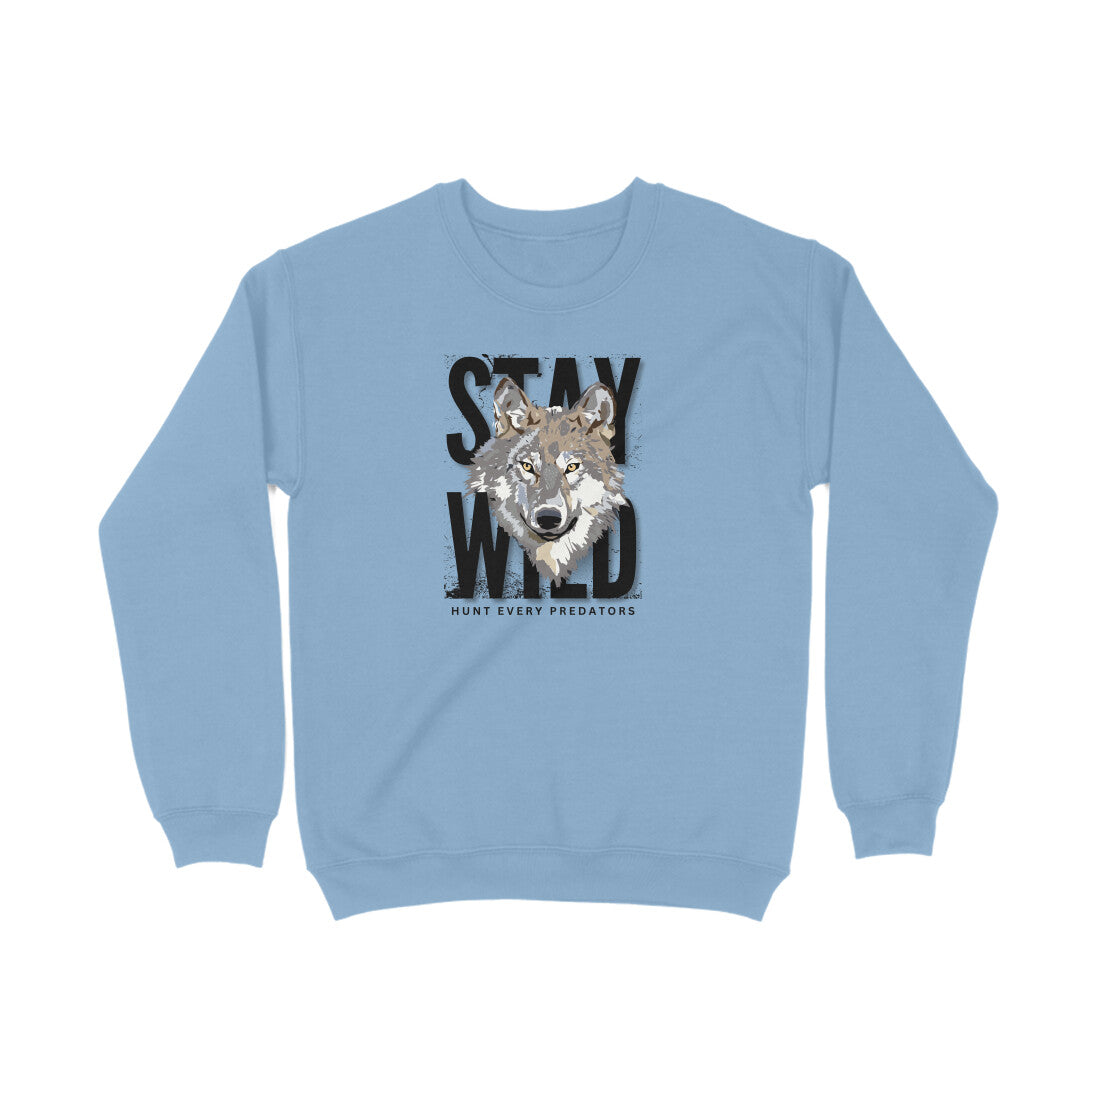 Baby Blue Printed Sweatshirt for Men